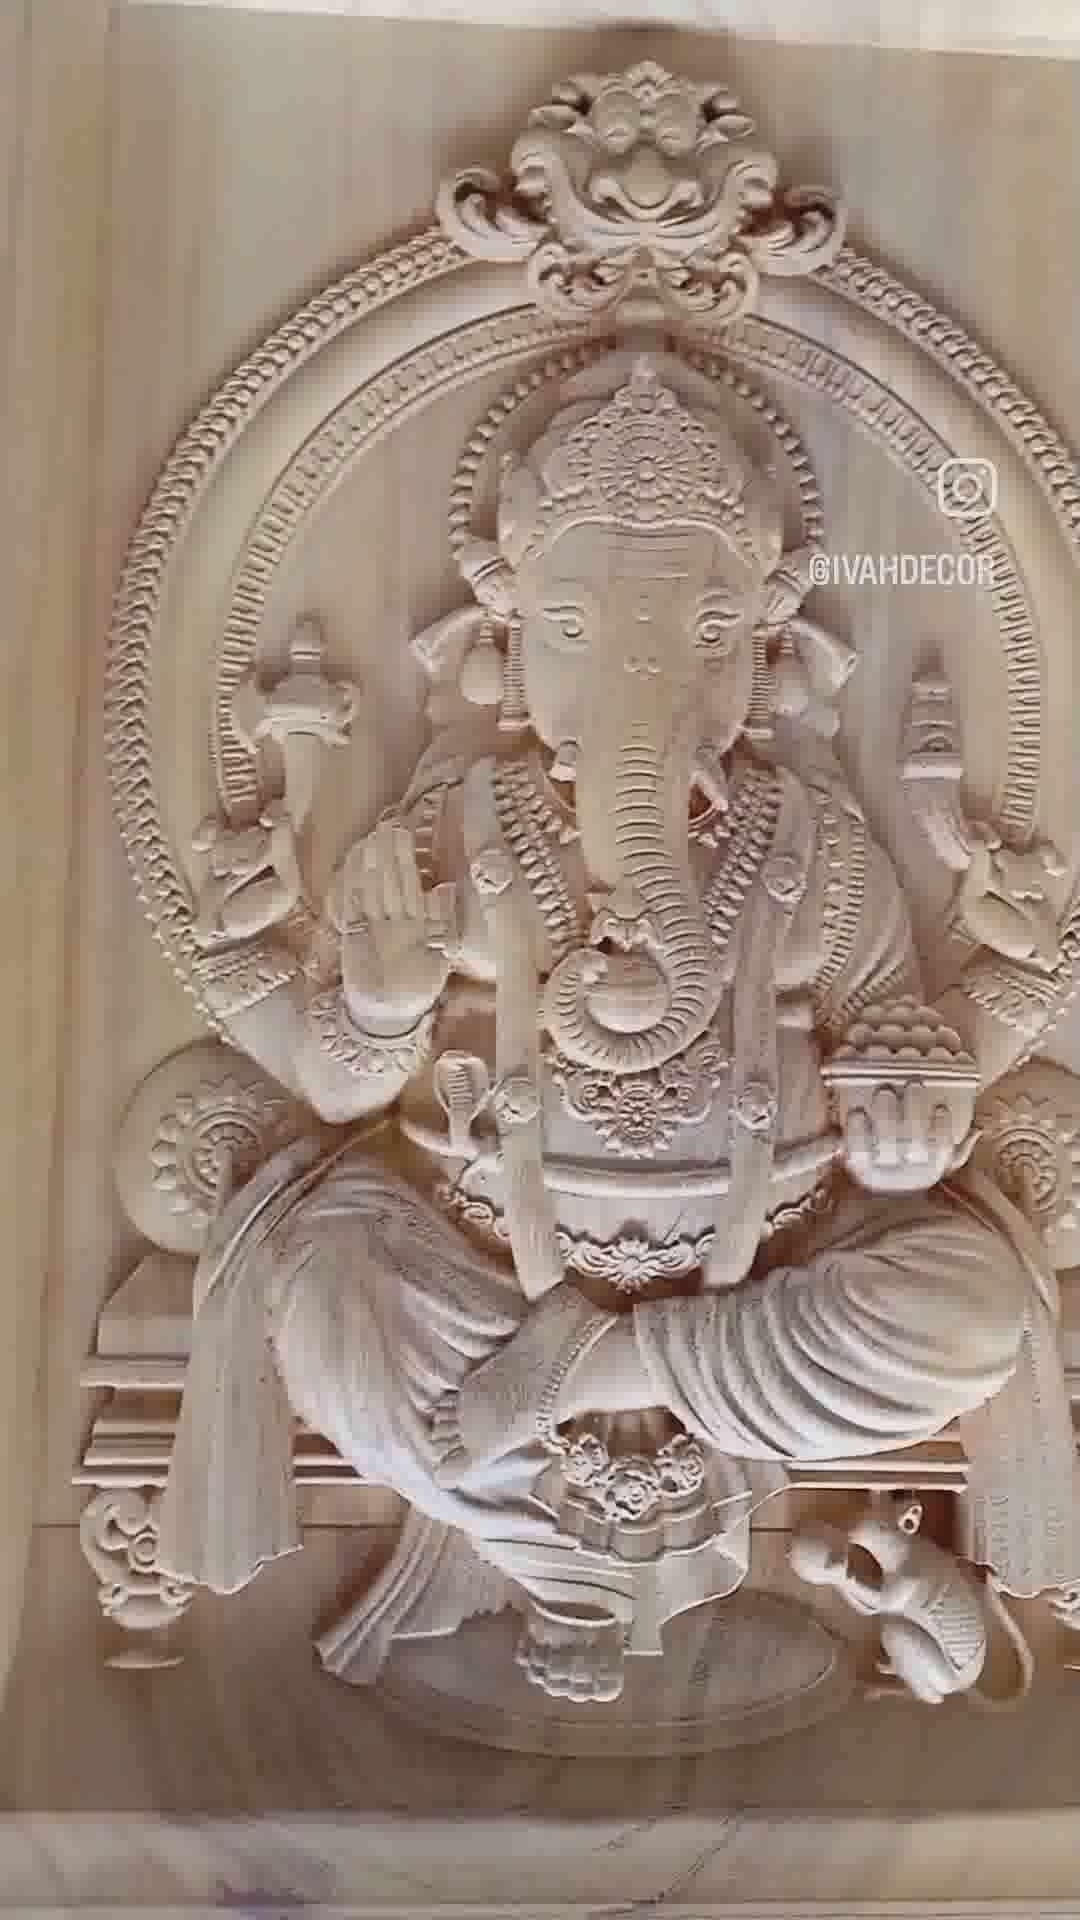 Lord Ganesha 🥰 : IVAH Decor

For more details please WhatsApp or call us 
0091 7561091369

#IVAH #ivah #ivahdecor #ivahwalldecor #lordganesha #ganapati #ganapathi #ganapathy #lordganesha #lordshiva #lordkrishna #lordvishnu #lordrama #woodenart #woodcarvings #ganapati_bappa_morya #mumbai #hyderabad #maharashtra #temple #prayer